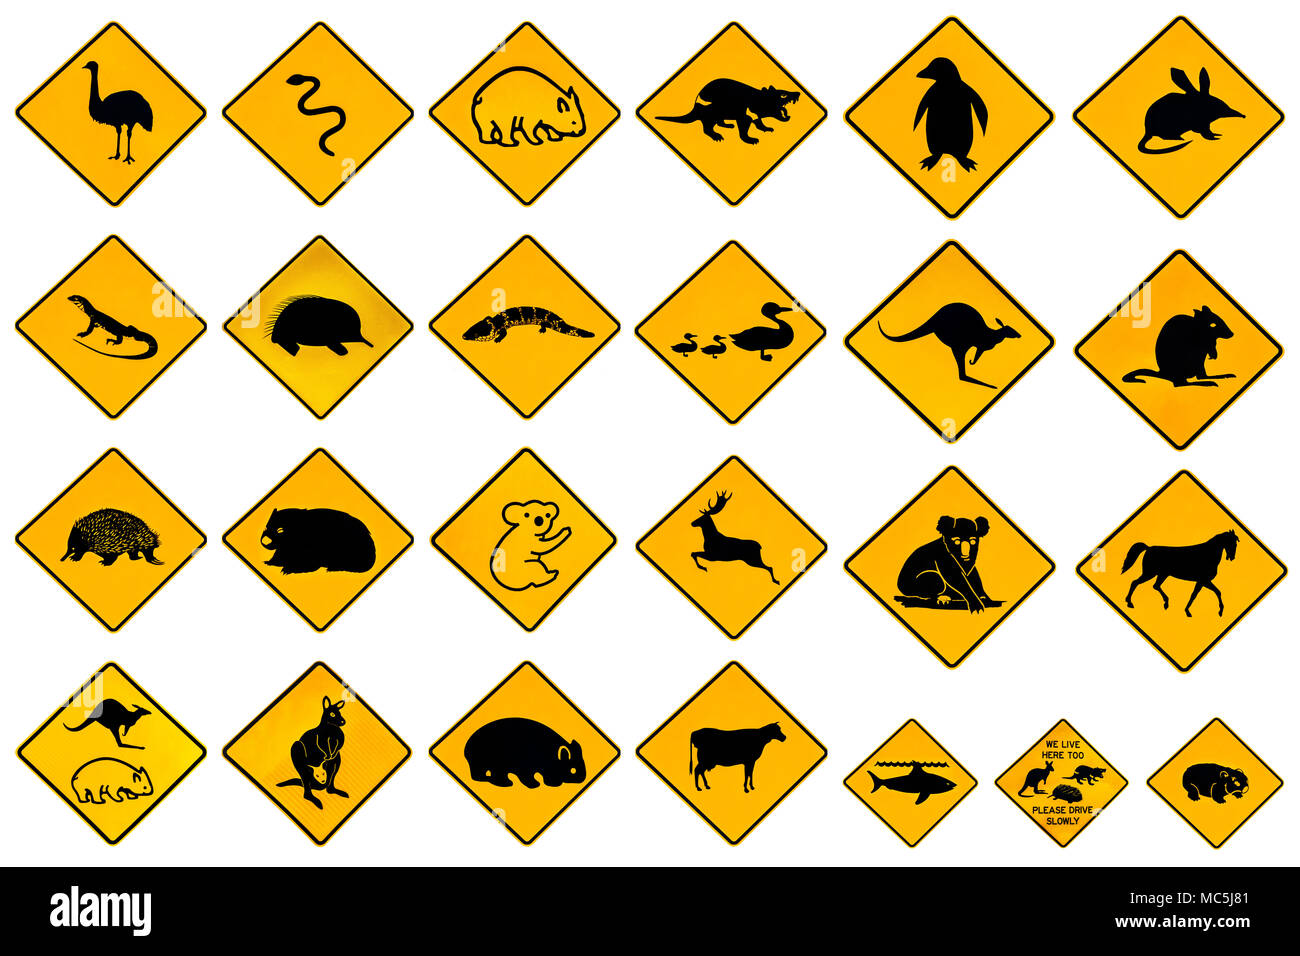 Australian warning signs for wildlife animals: Emu, Echidna, Tasmanian Devil, Wombat, Kangaroo, Penguin, Shark, Ducks Snake Rat Deer reptiles and vehi Stock Photo